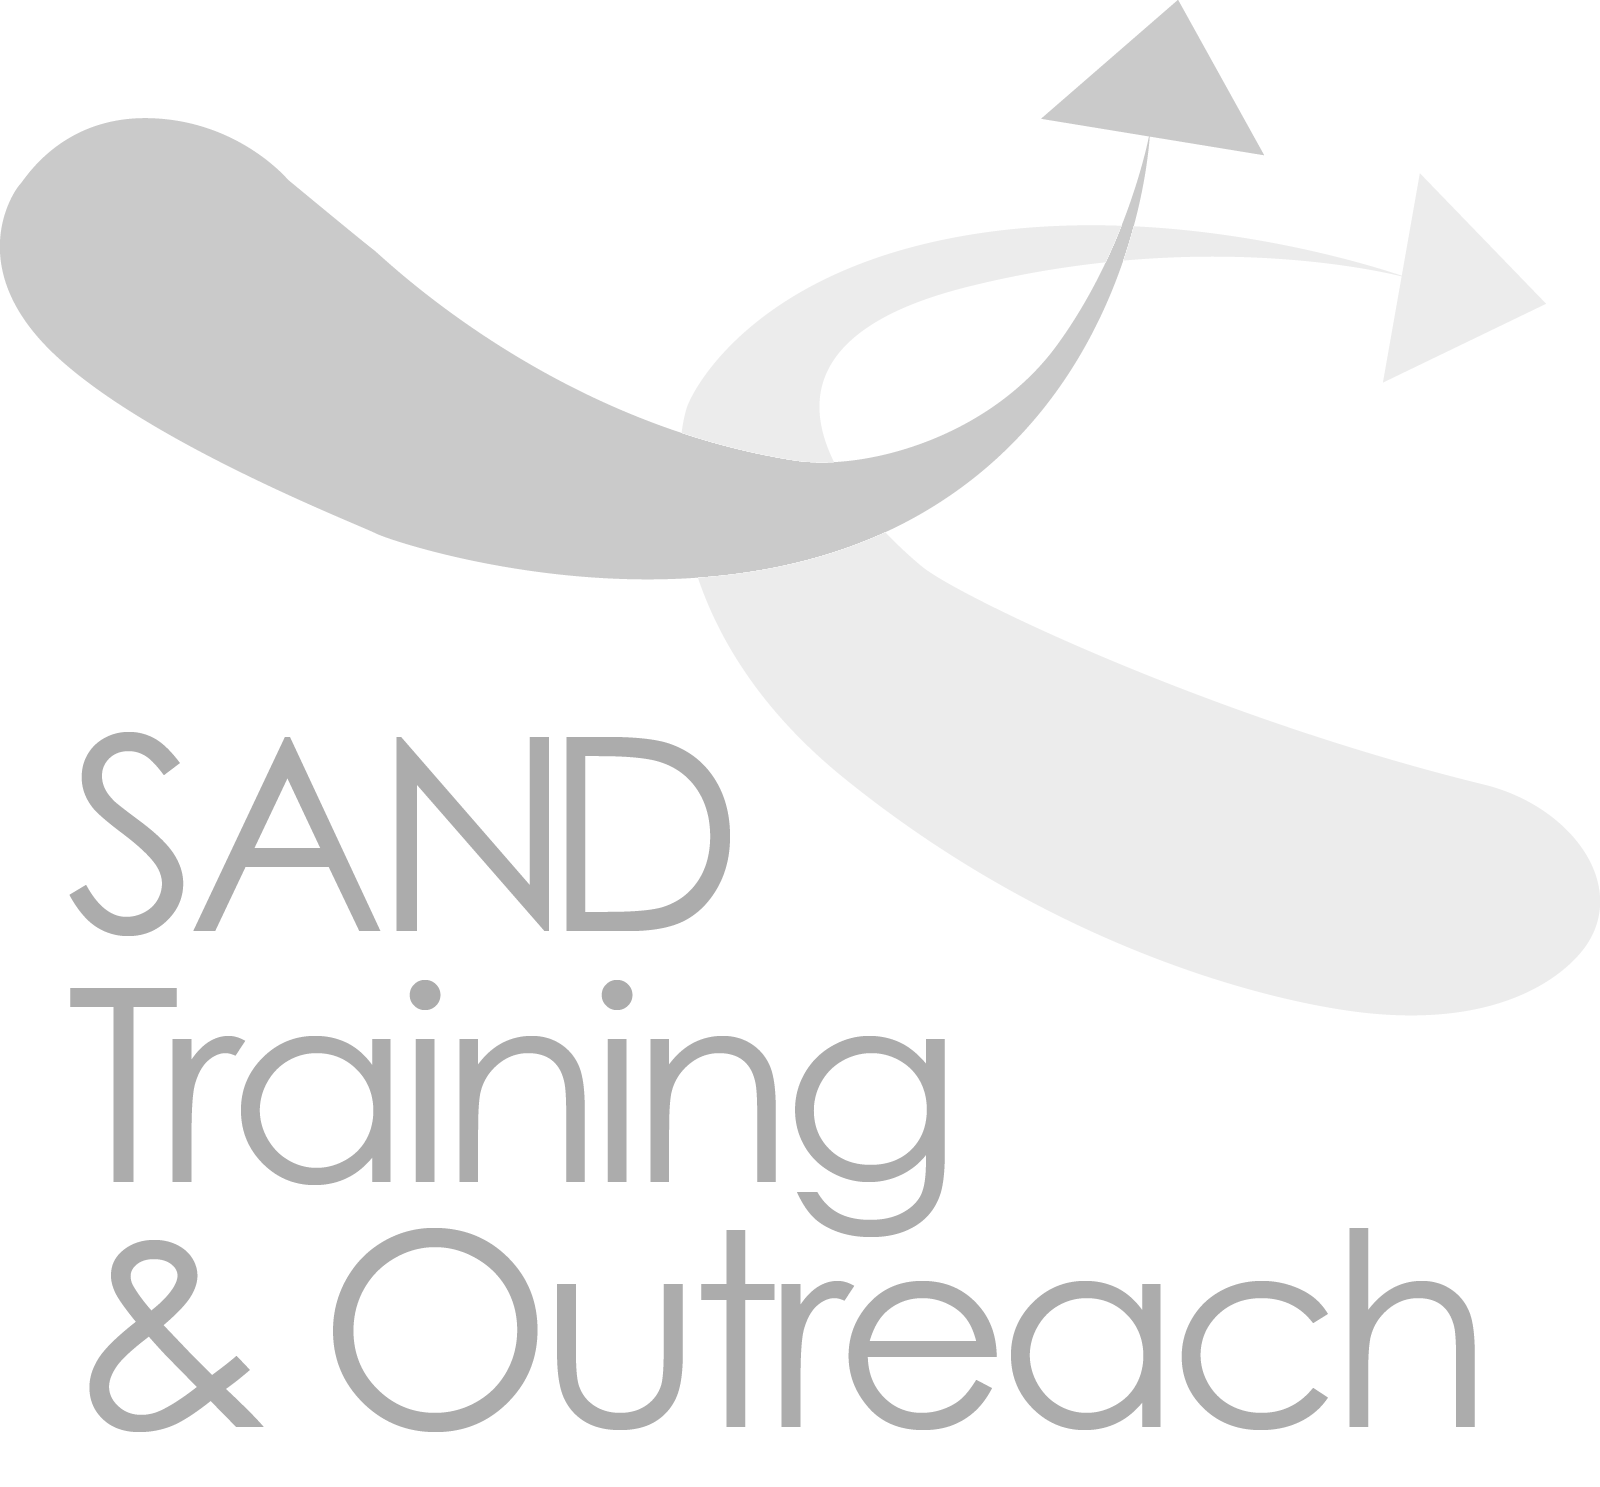 SAND Training & Outreach